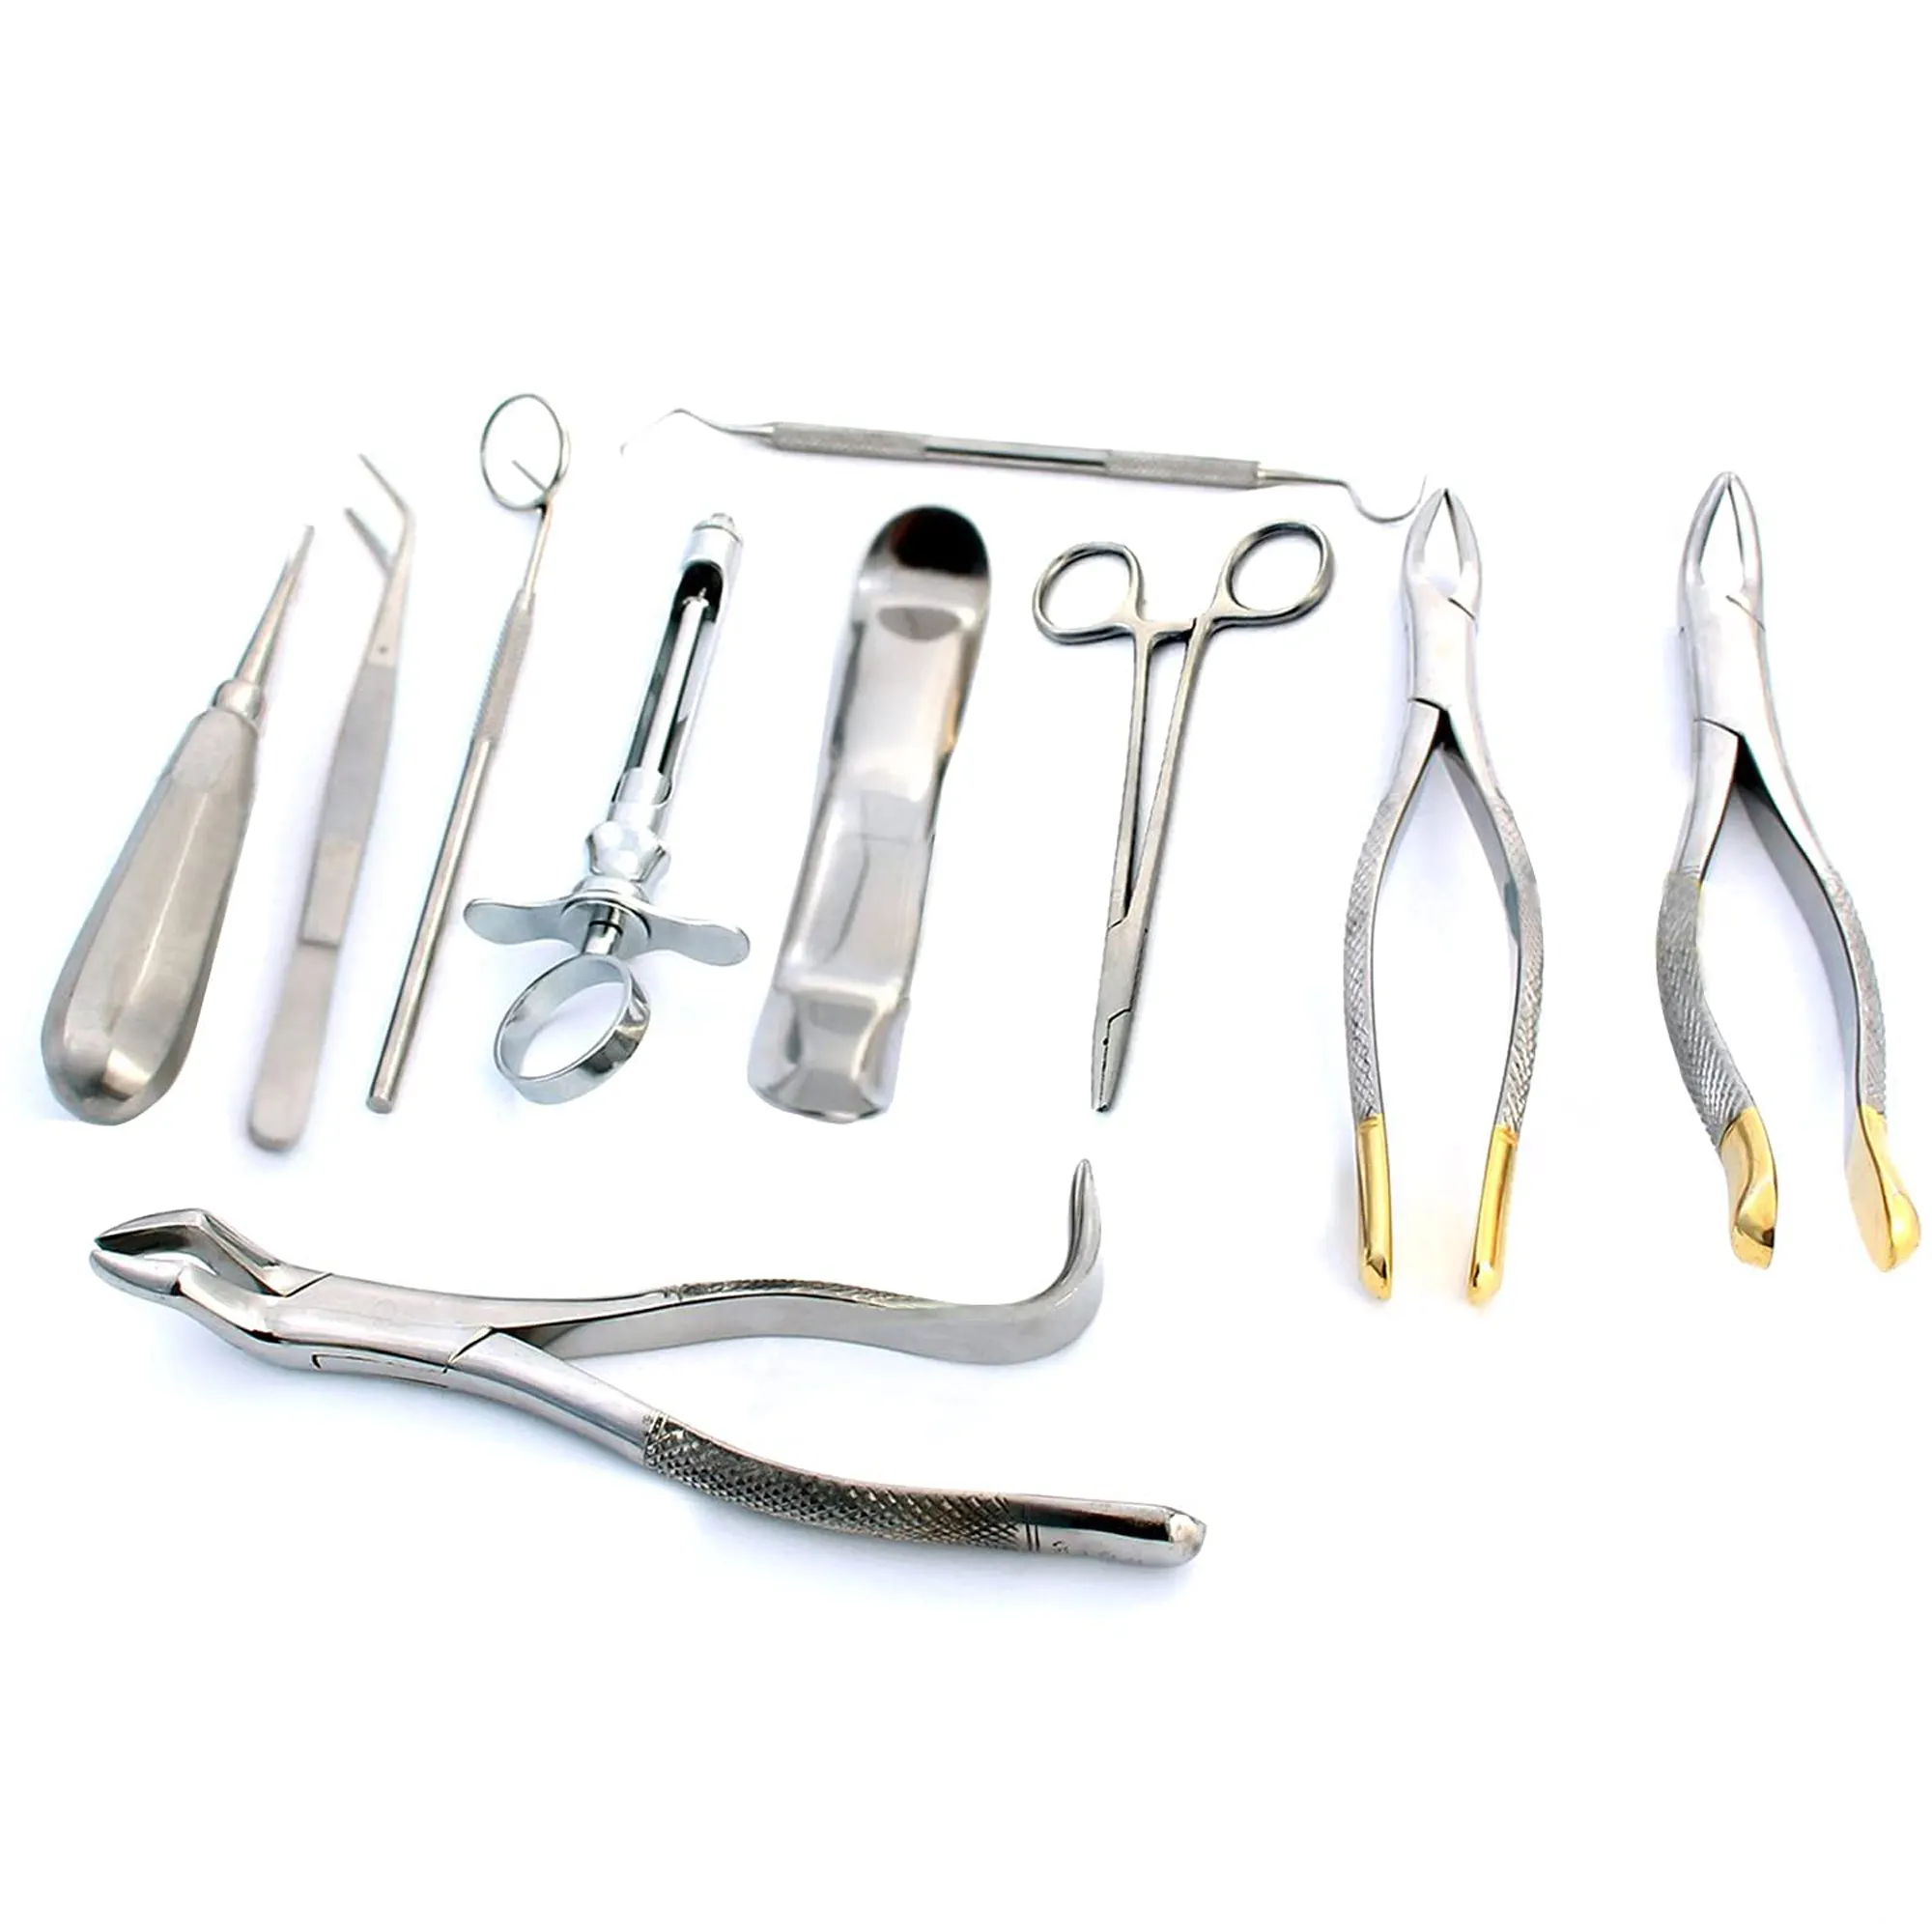 Kit de dientes para cirugía dental, fórceps/Elevadores/escaladores/sonda/jeringa dental/fórceps de tejido, implantes dentales